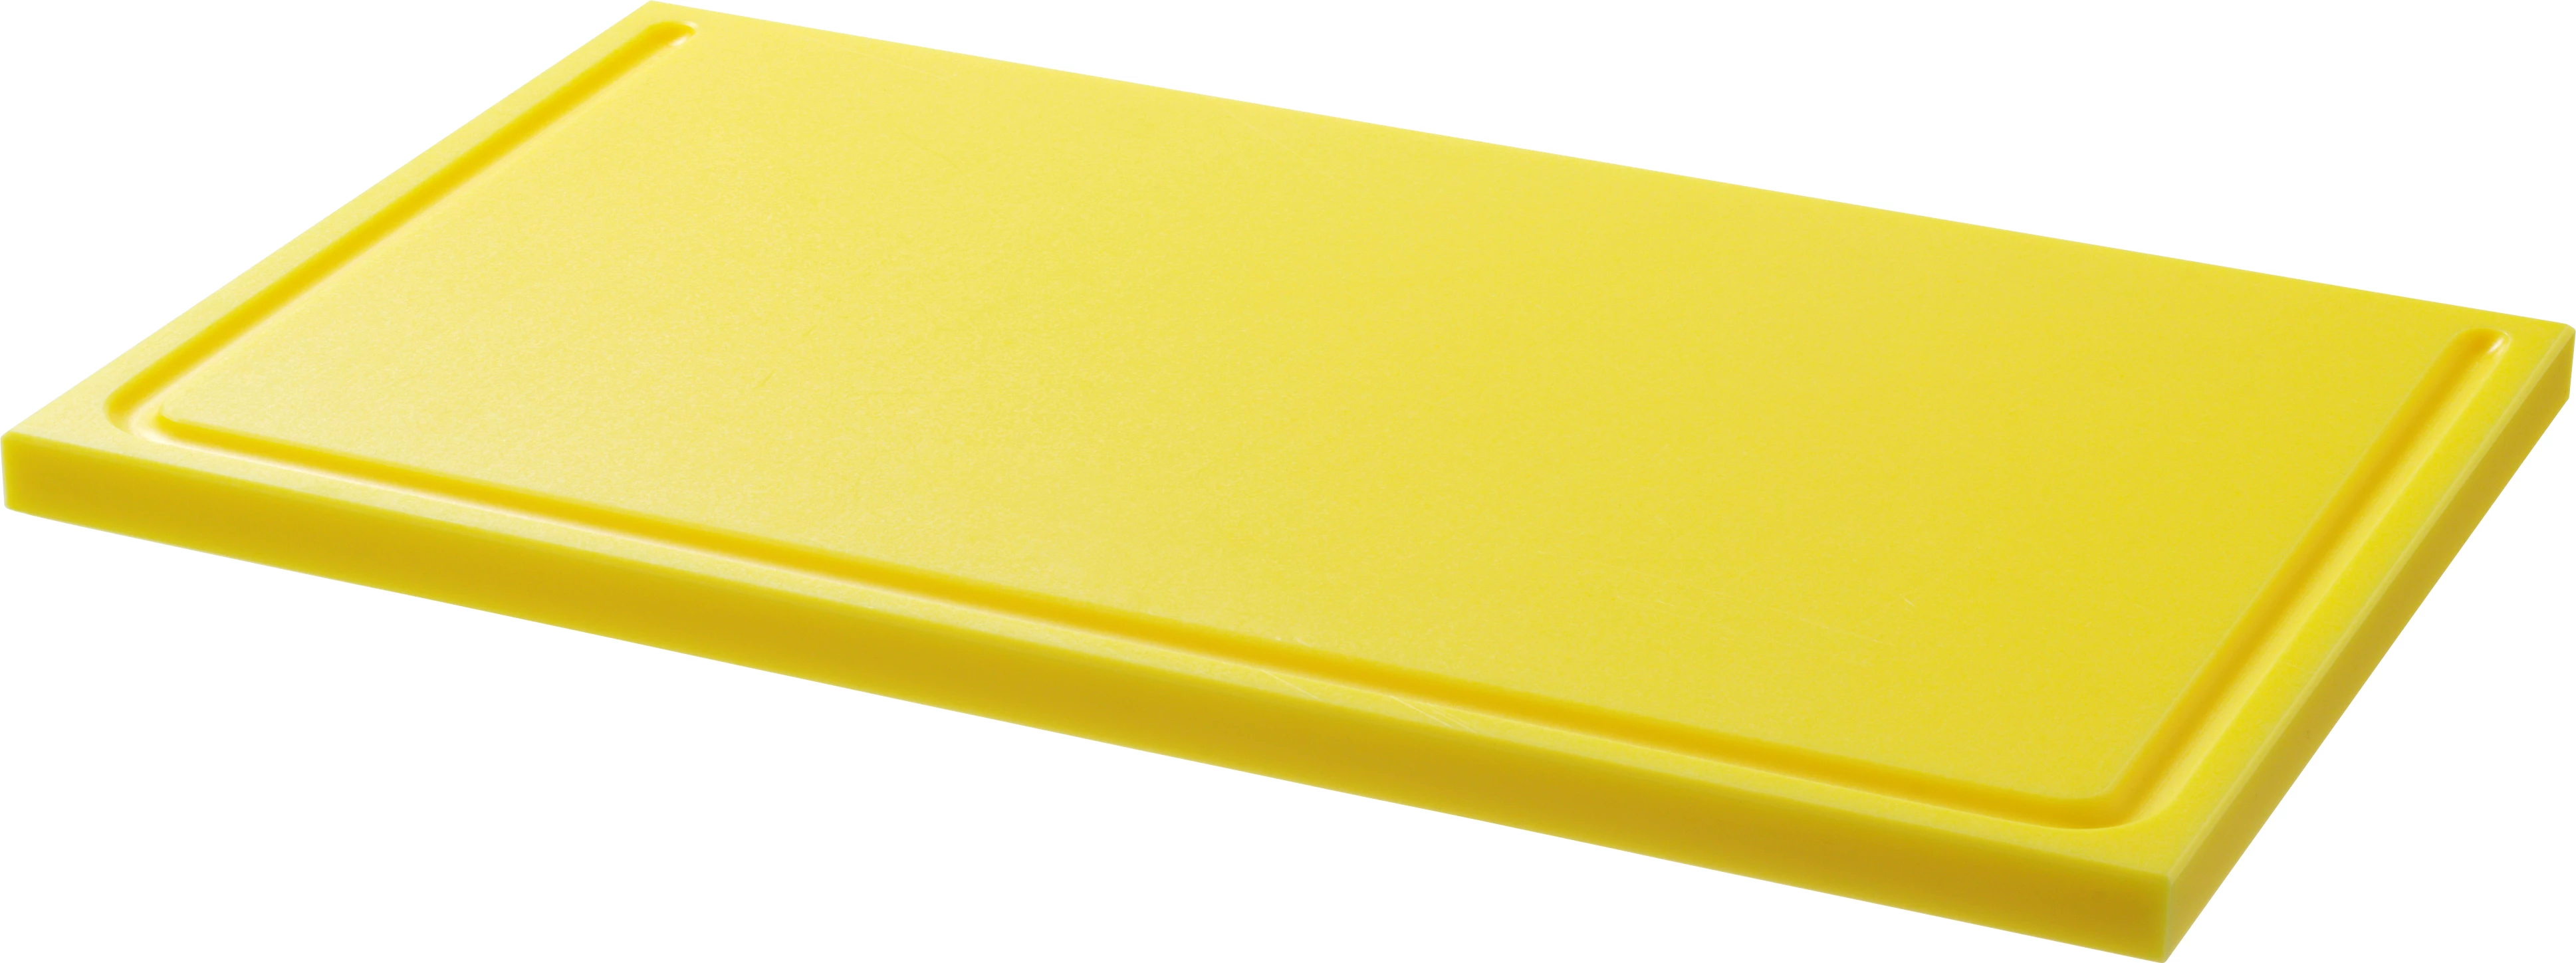 Euroboard skæreplanke, gul, 50 x 30 x 2 cm